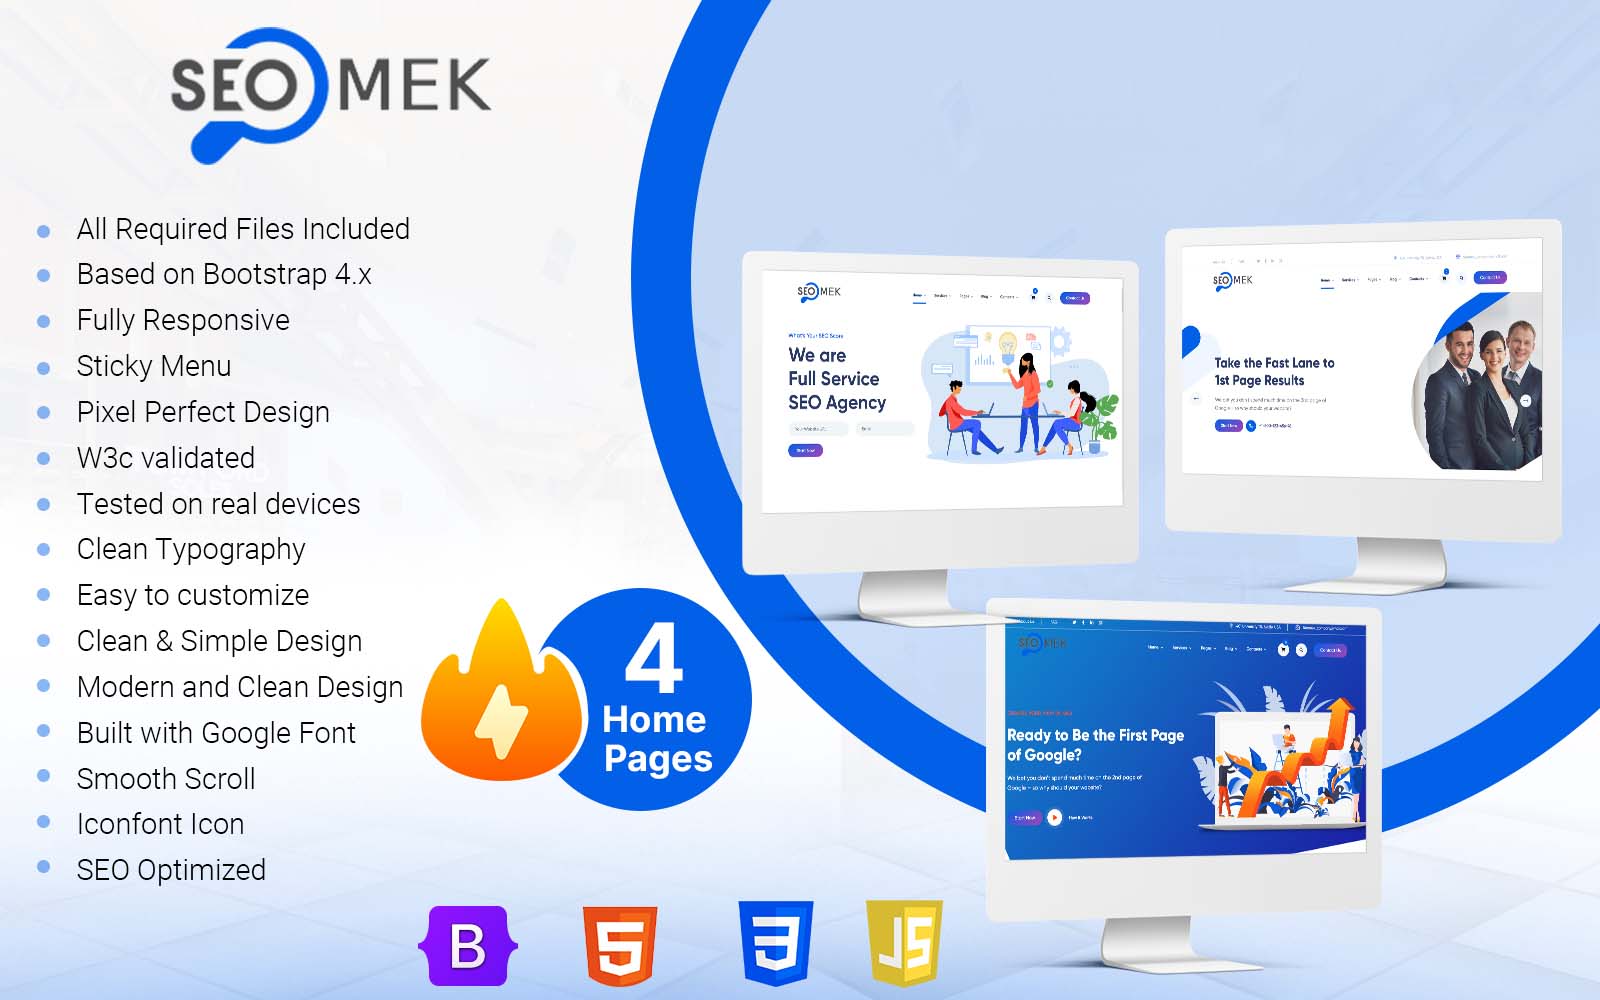 SEOMEK - SEO & Marketing HTML5 Template Website Template